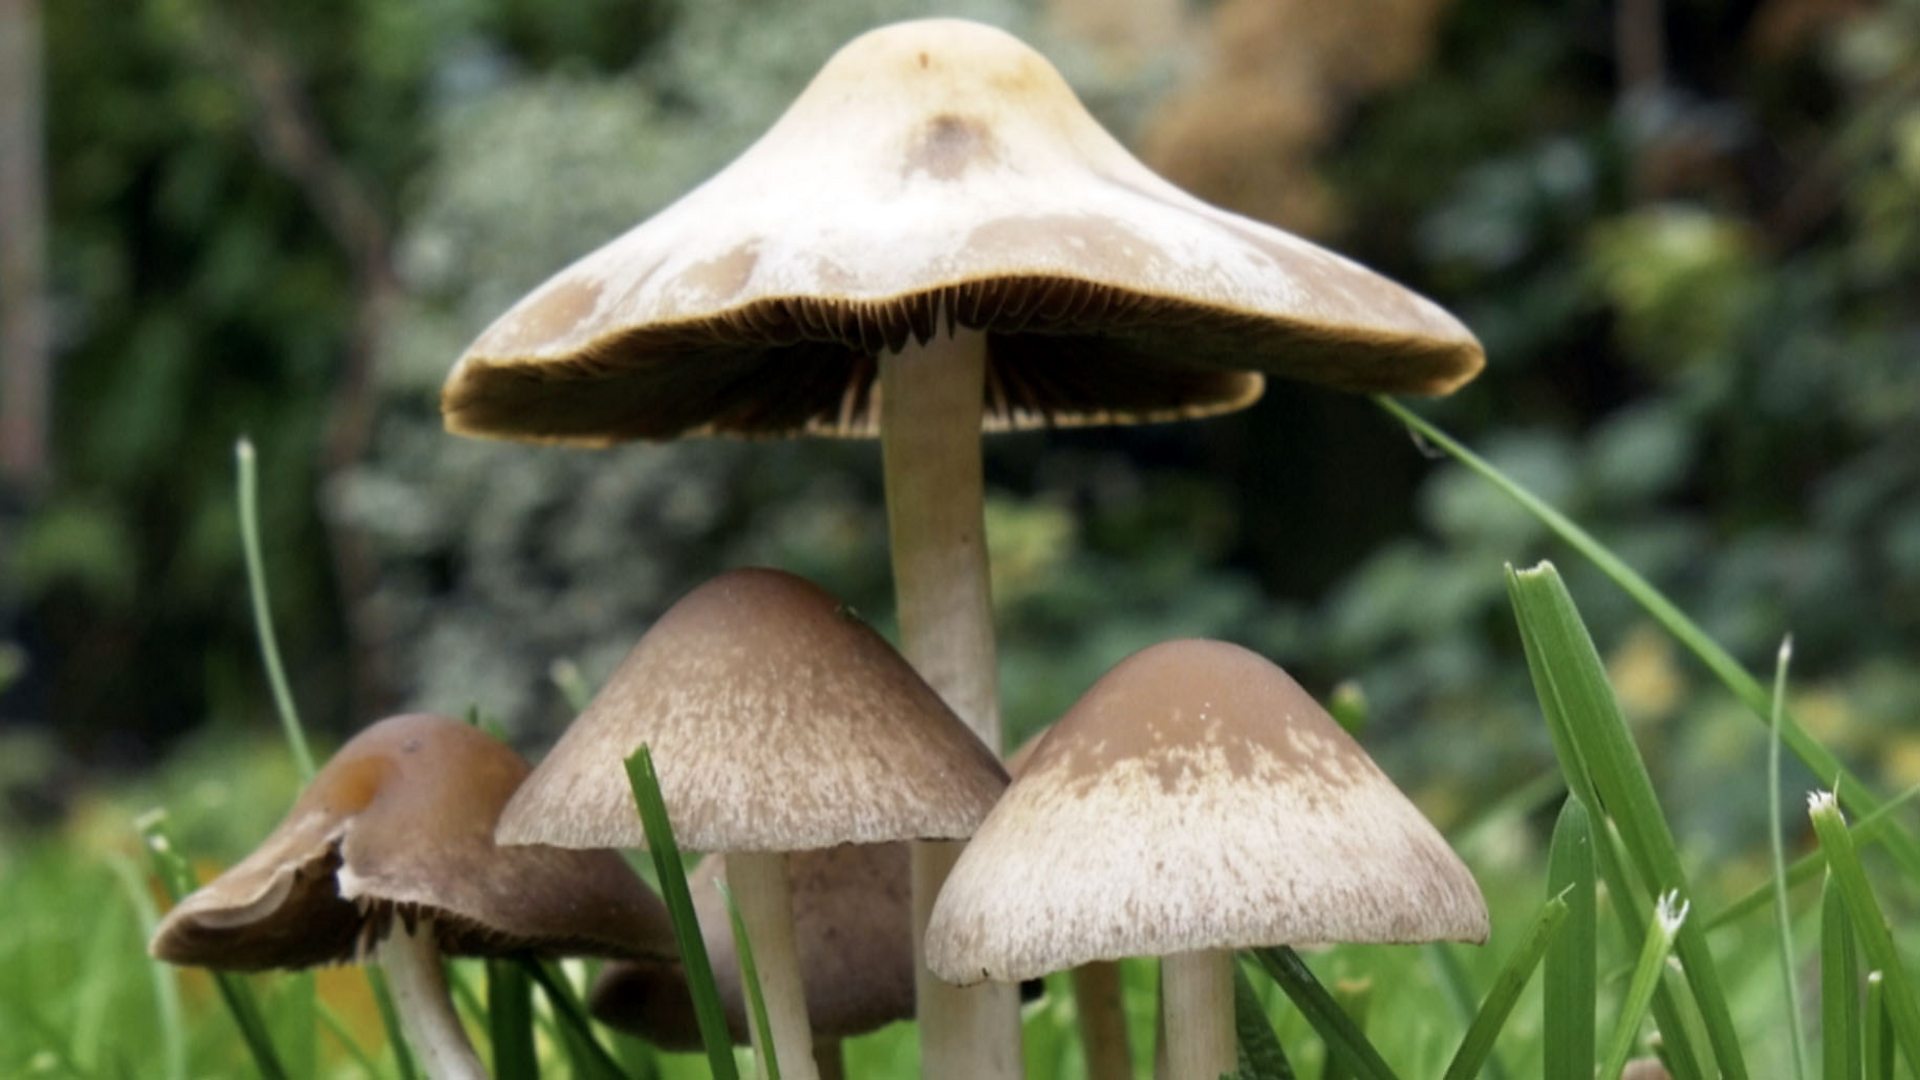 Cultivate Mushrooms